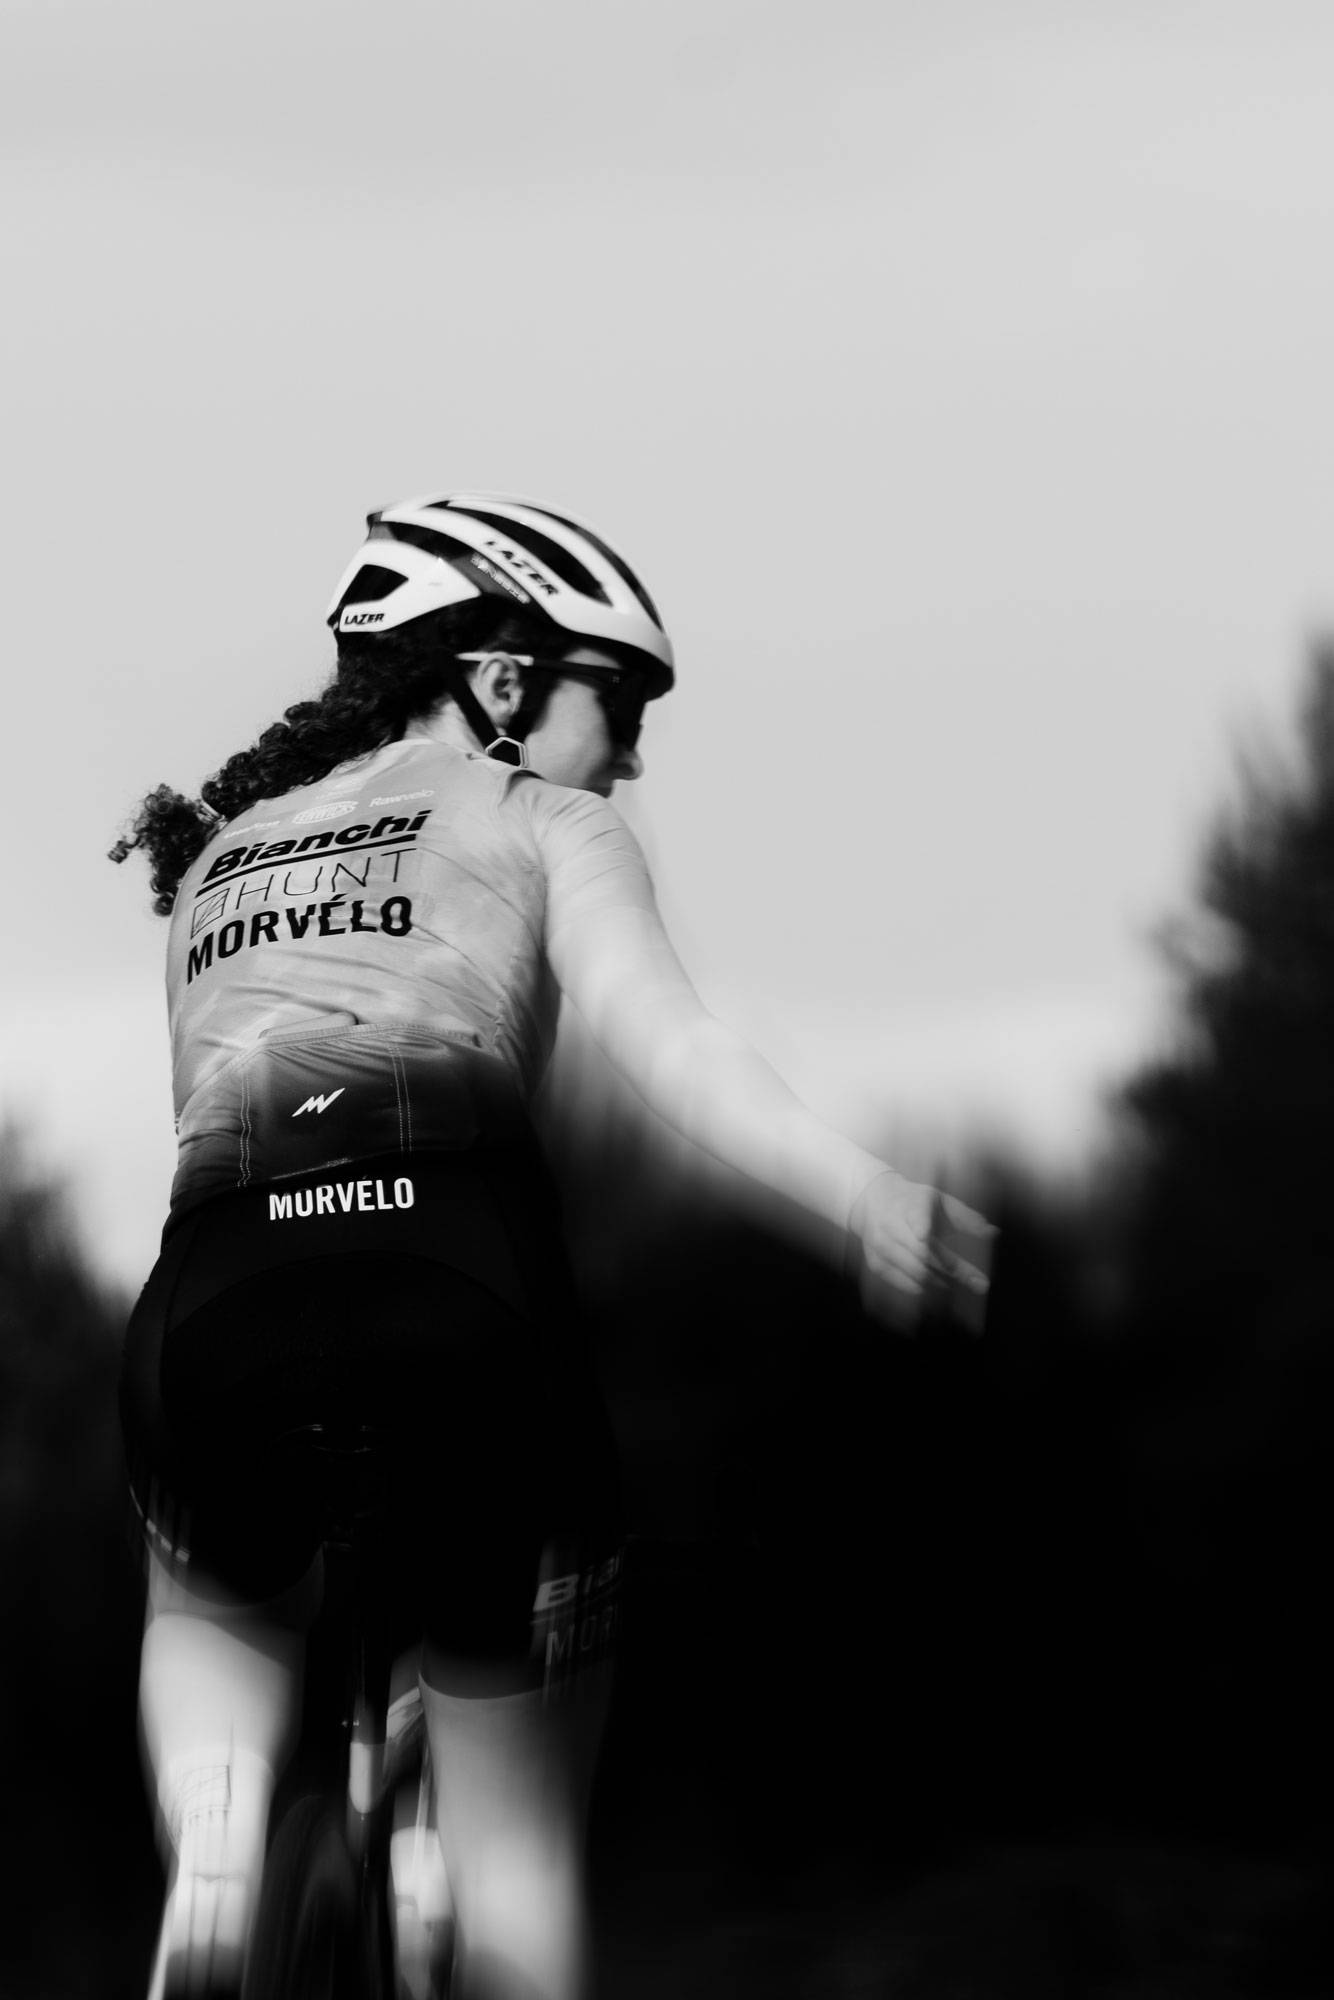 Bianchi HUNT Morvelo cyclist riding